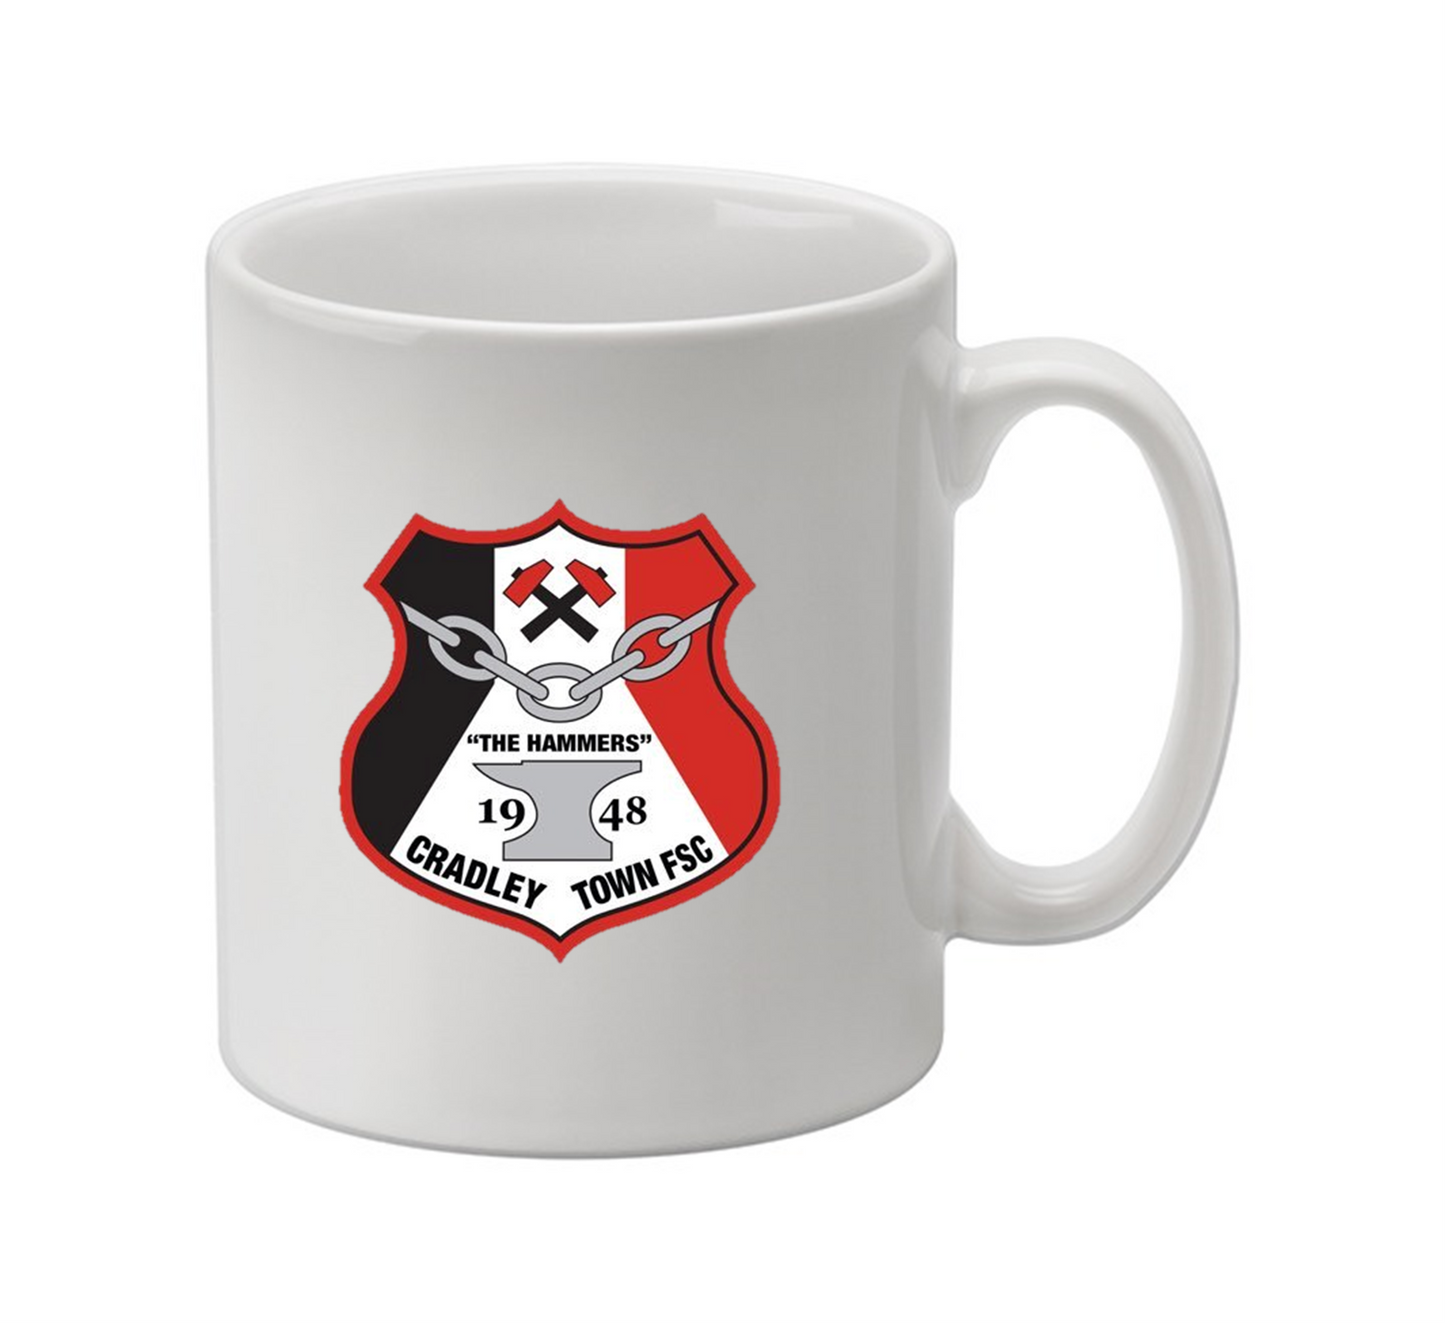 Cradley Town FC Mug